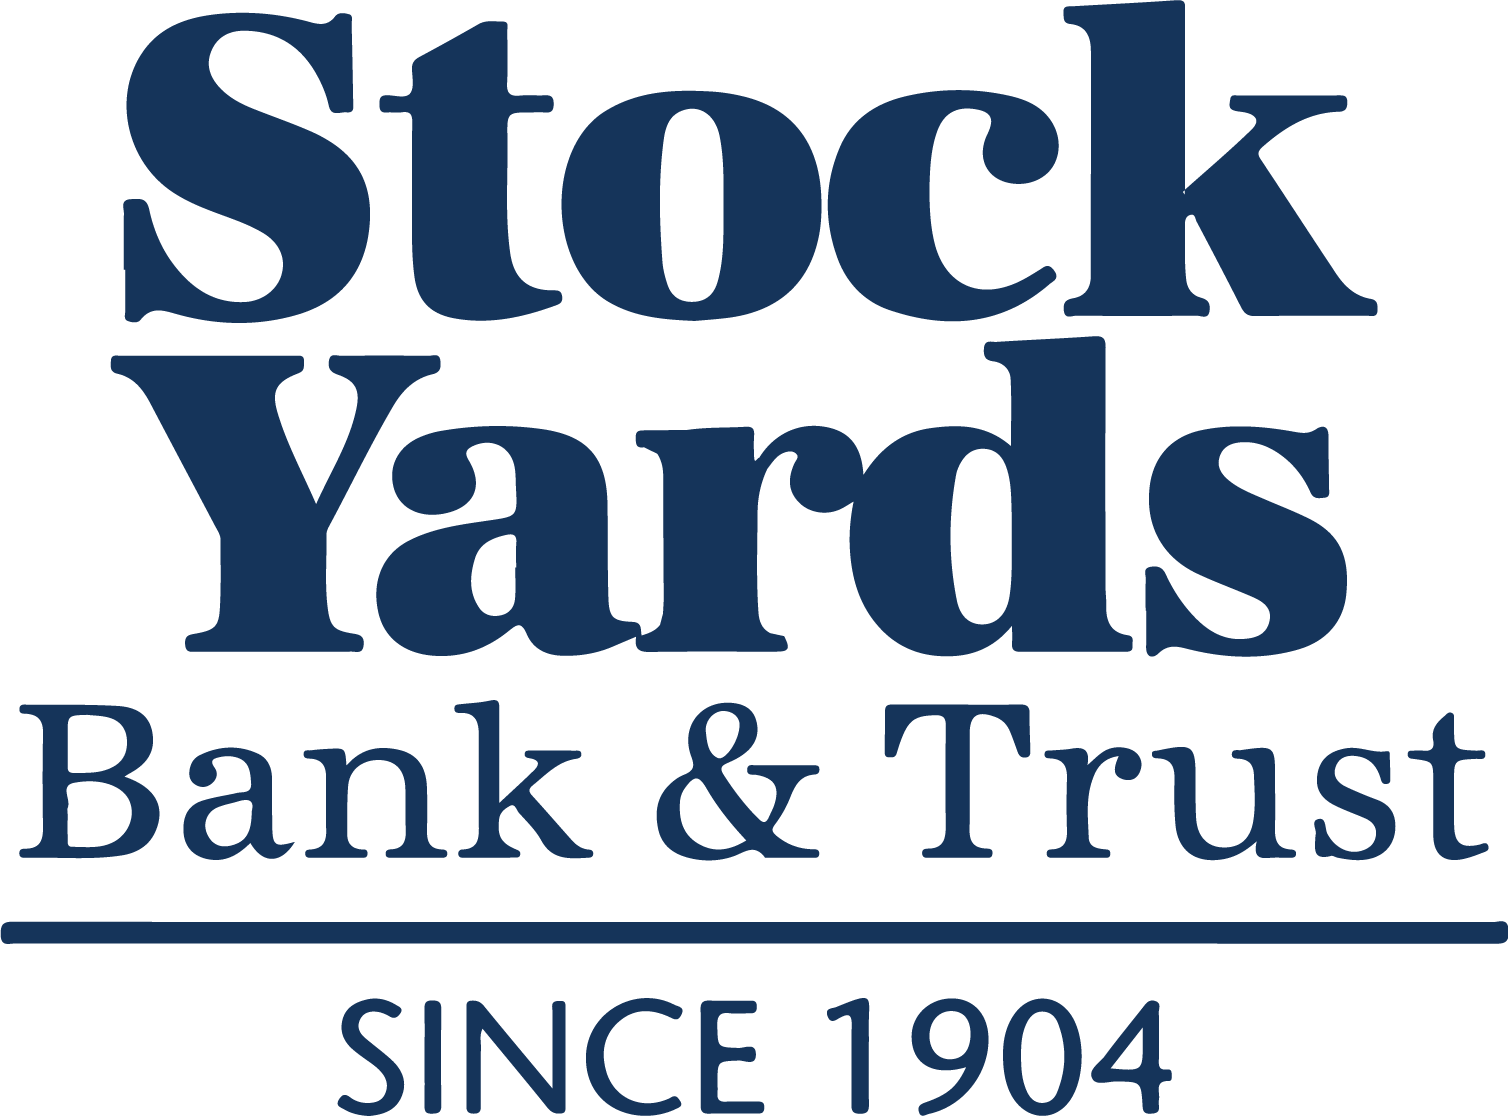 Stock Yards Bancorp logo large (transparent PNG)